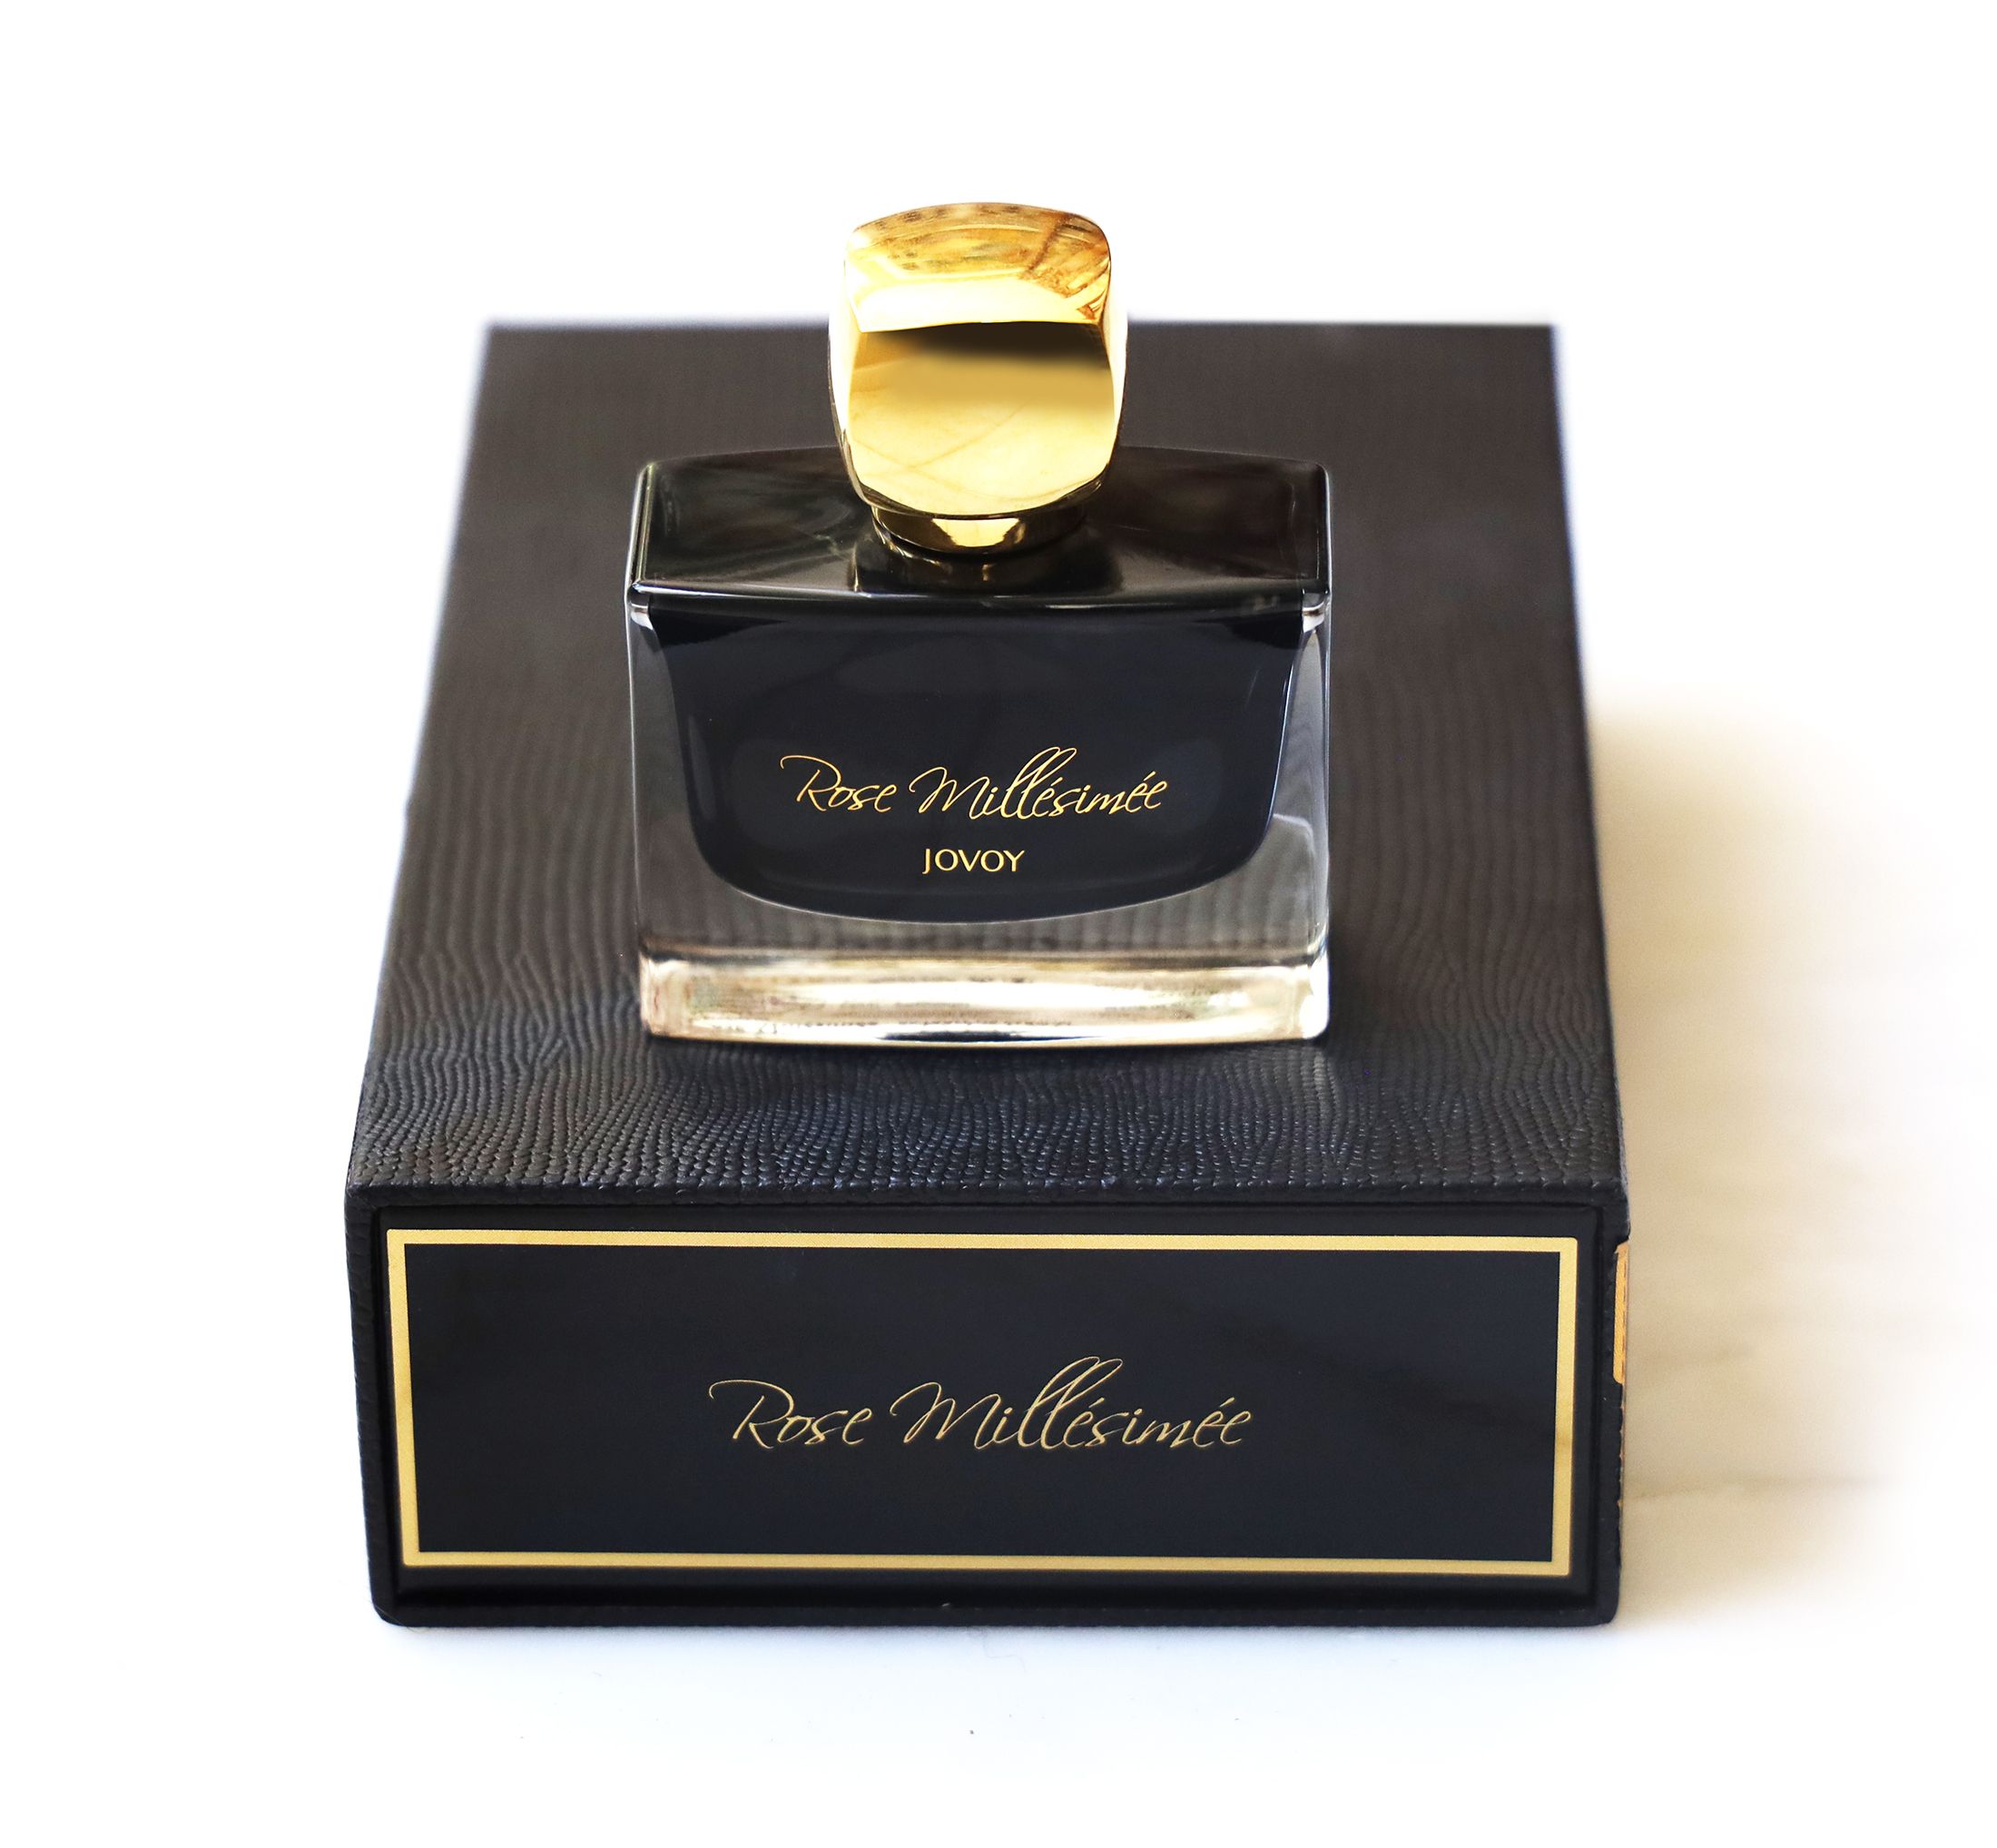 Rose Millesimee Jovoy Paris perfume - a fragrance for women 2017